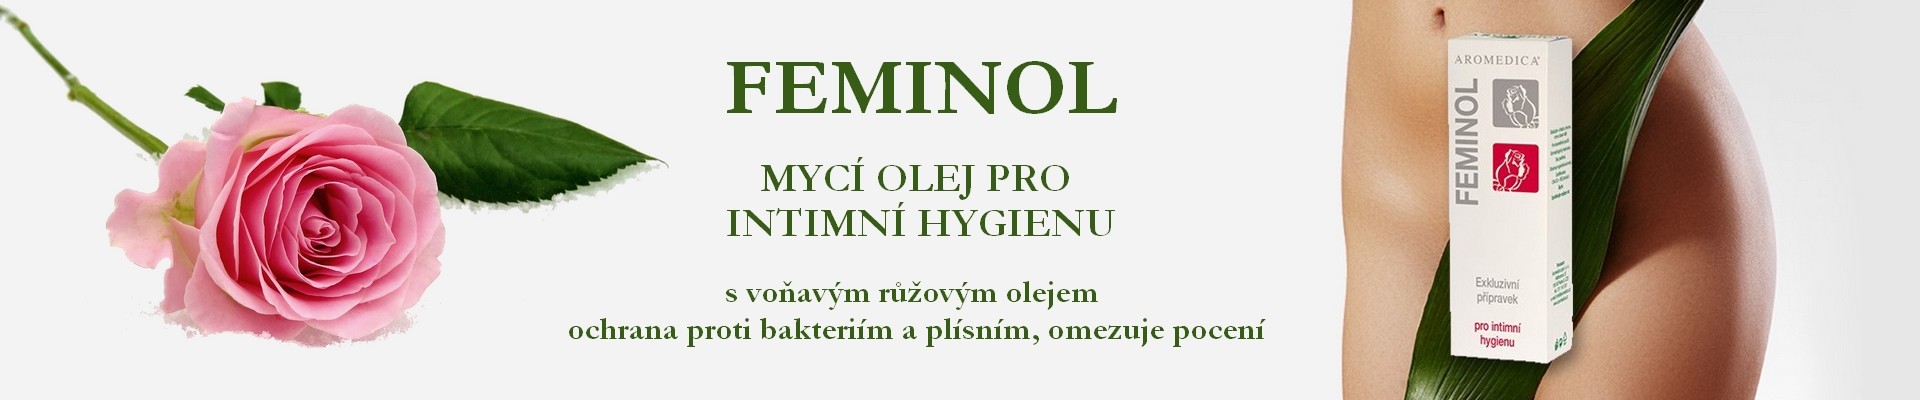 Feminol